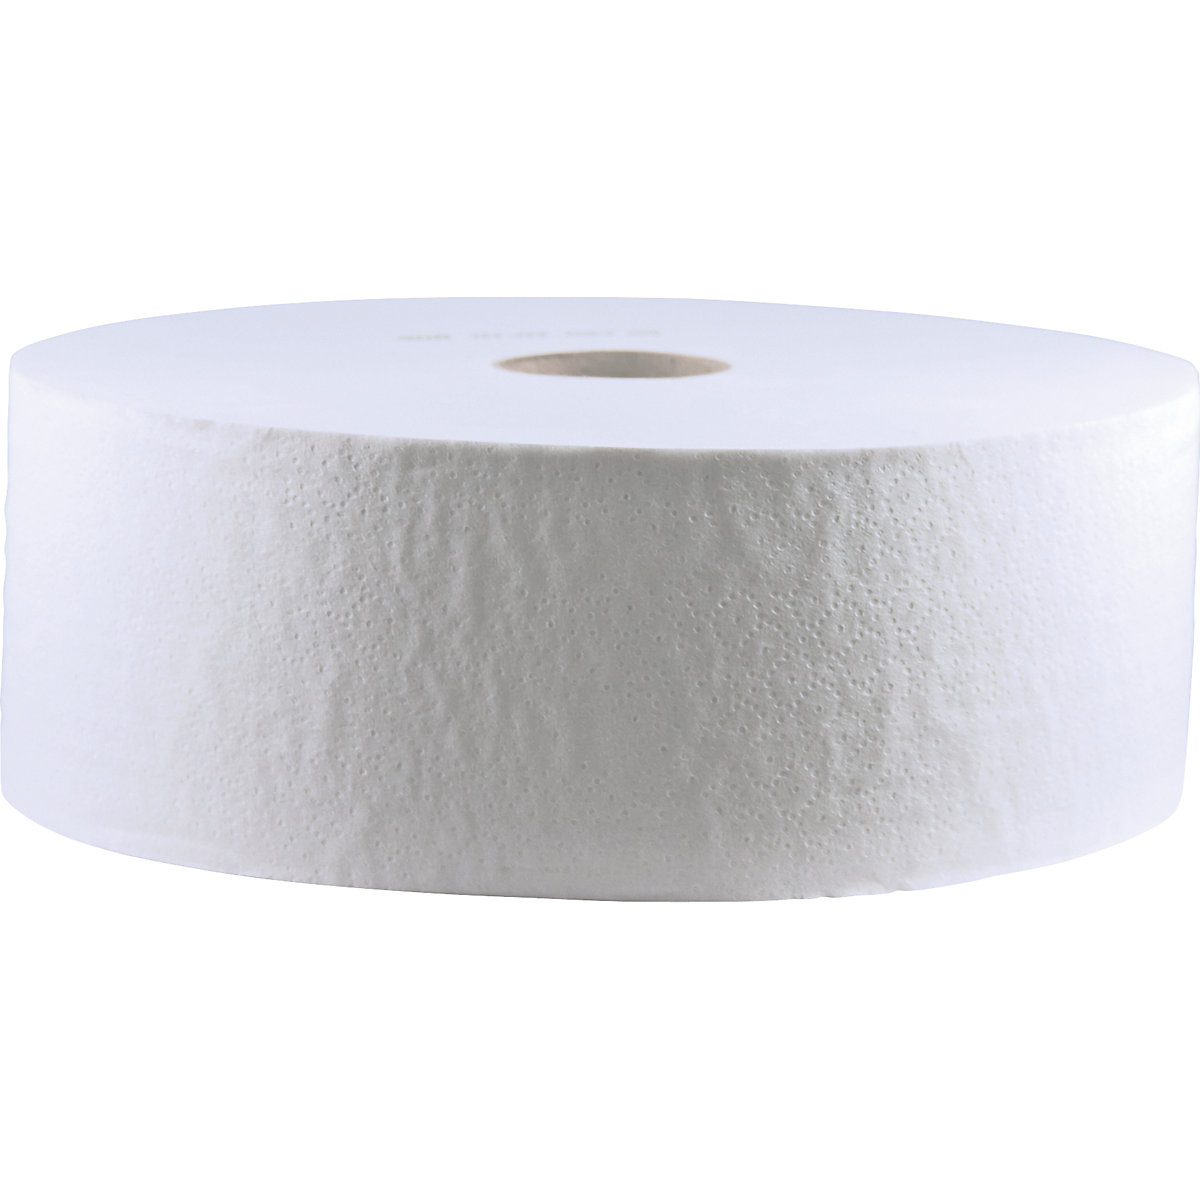 Velike role toaletnega papirja Tissue – CWS